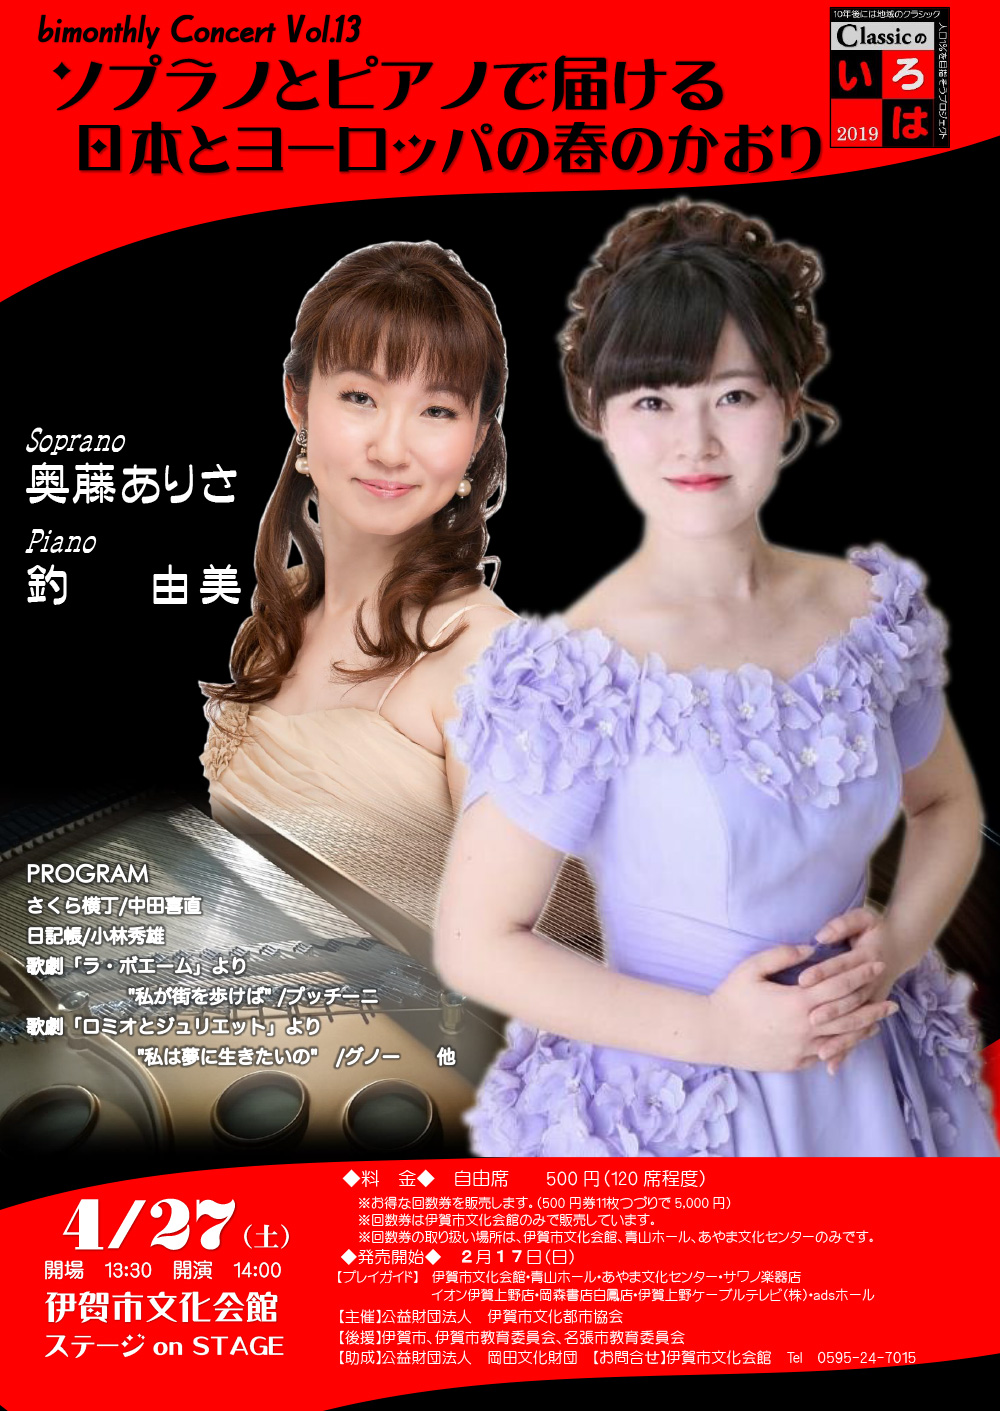 bimonthly Concert Vol.13 ソプラノとピアノで届ける日本とヨーロッパの春のかおり